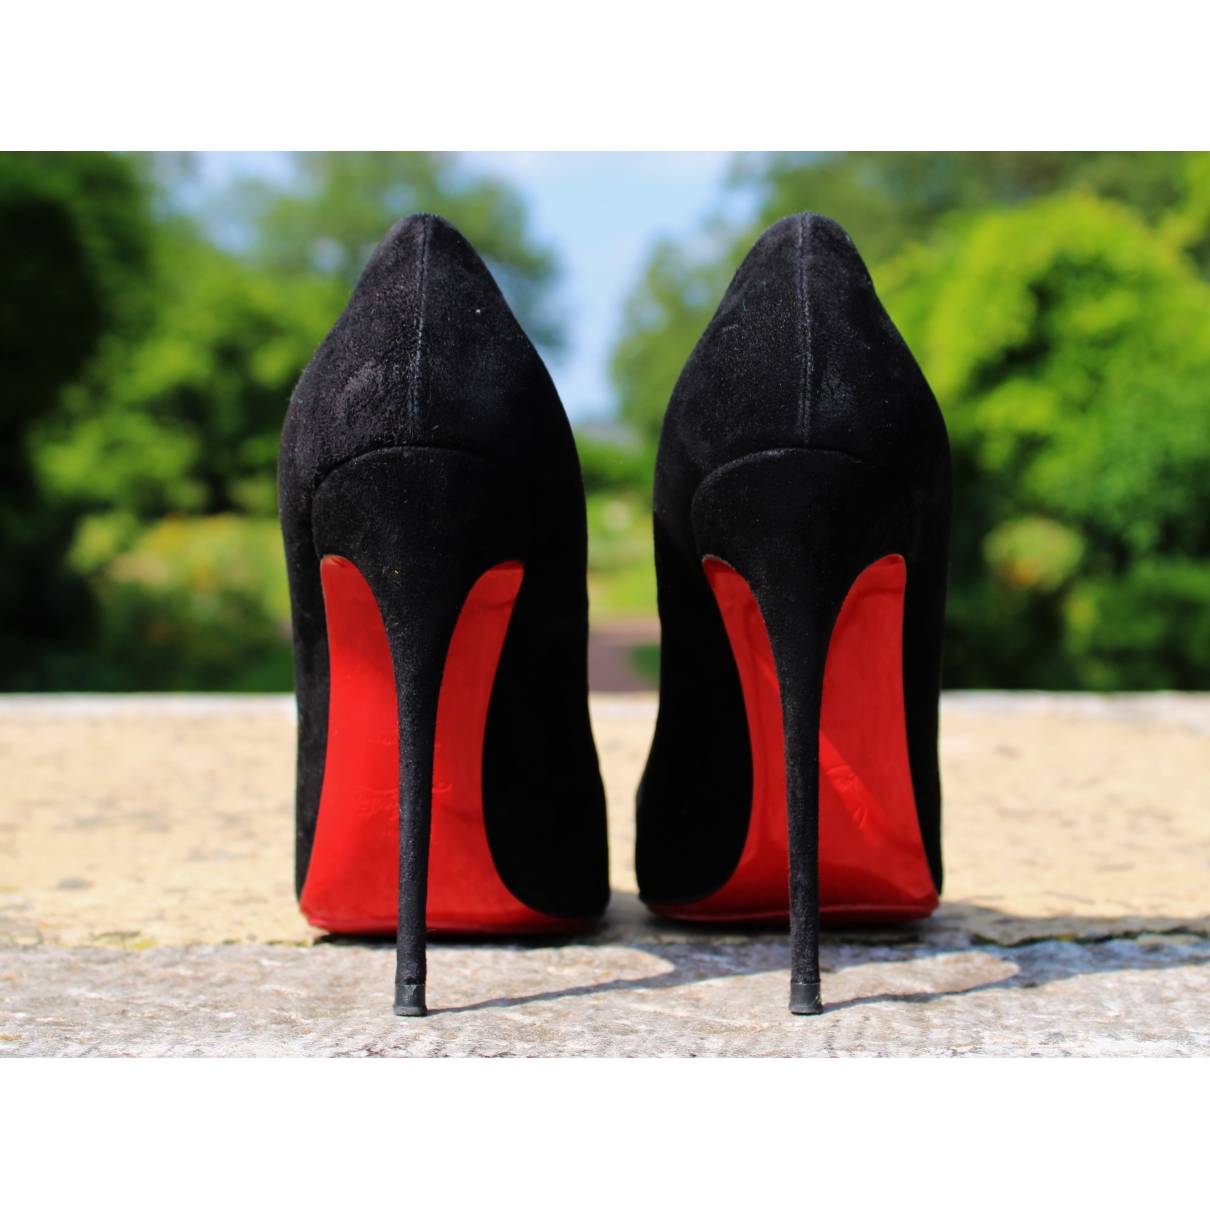 louboutin high heels